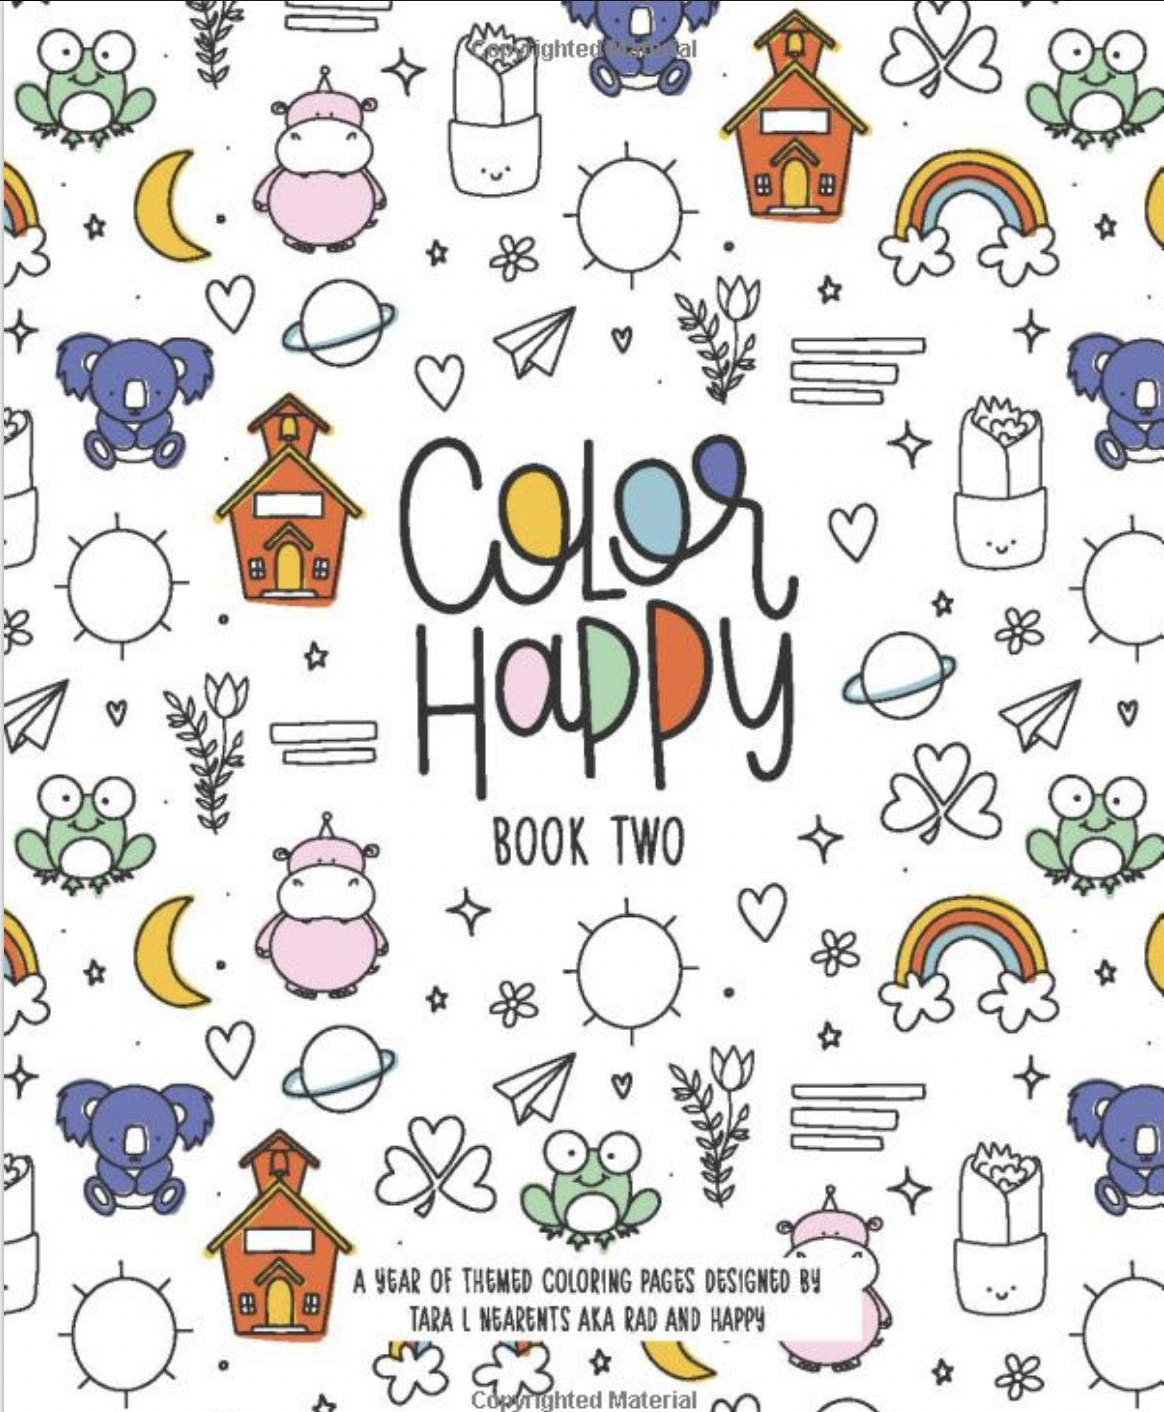 Color Happy coloring book by Tara L.  Nearants